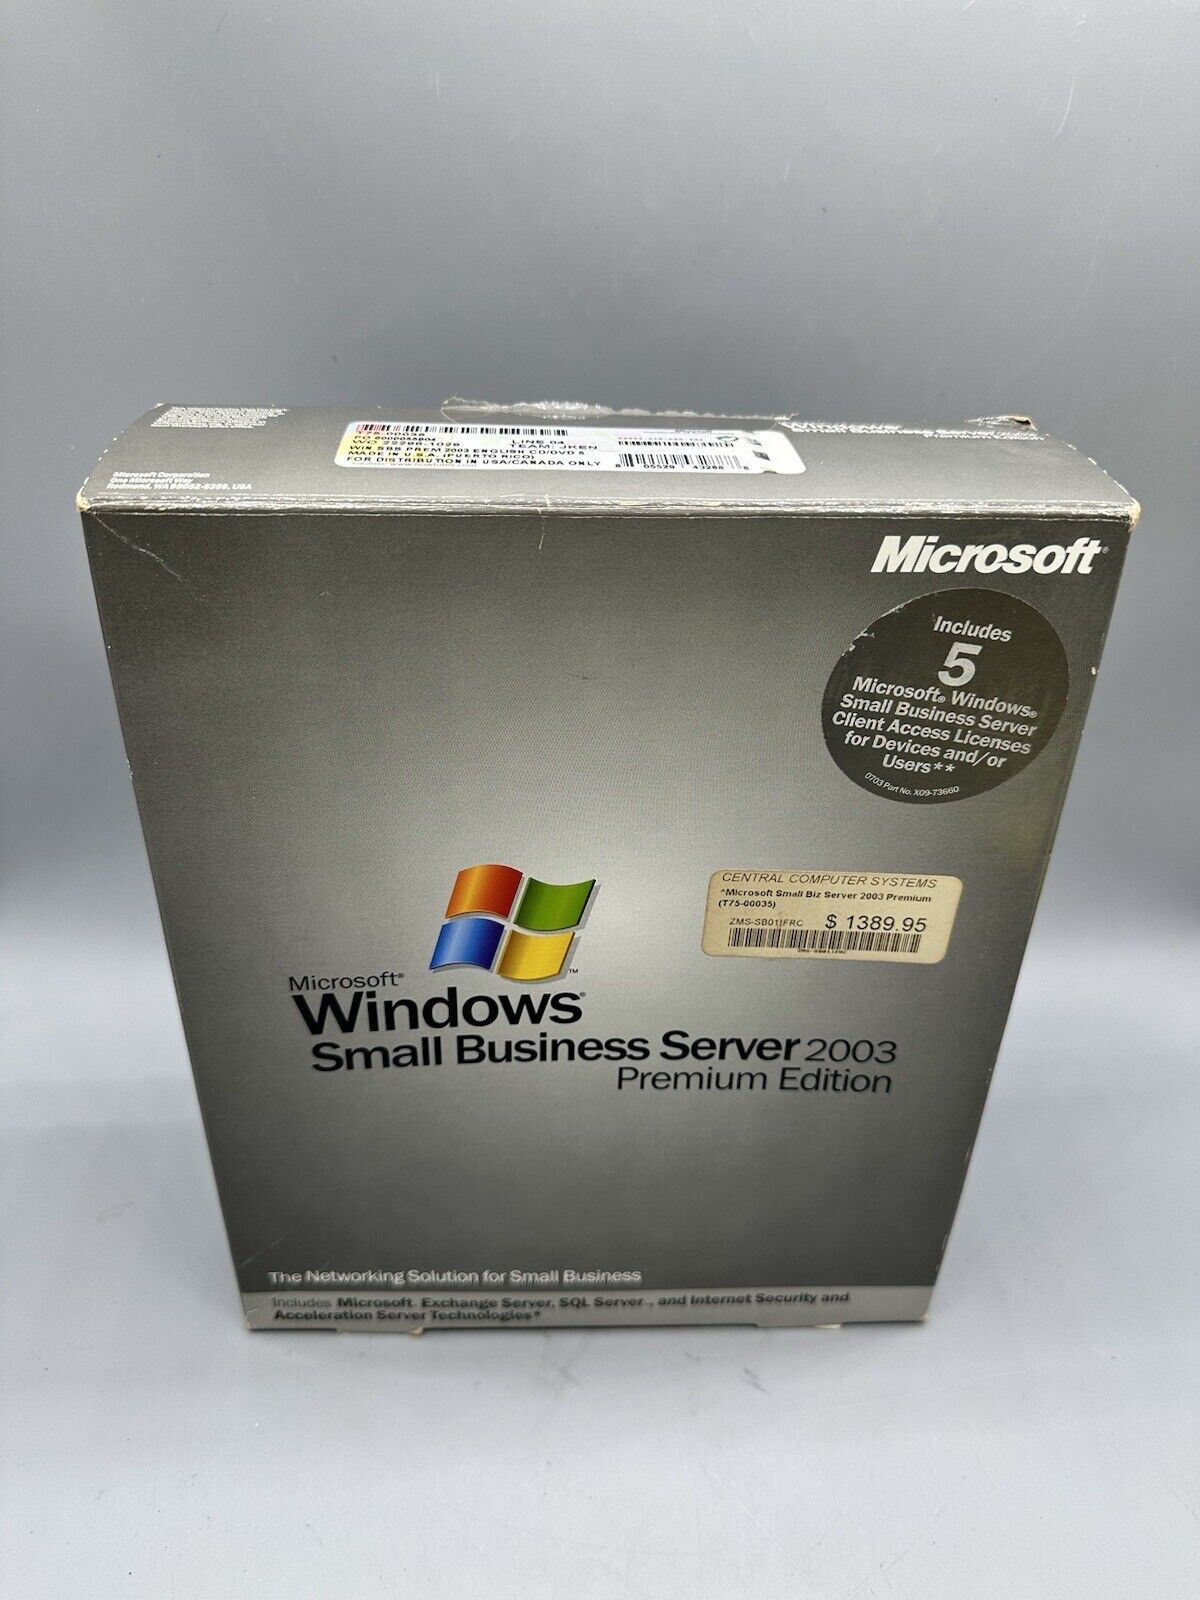 Windows Small Business Server 2003 Premium Edition Full Version w/ Product Key